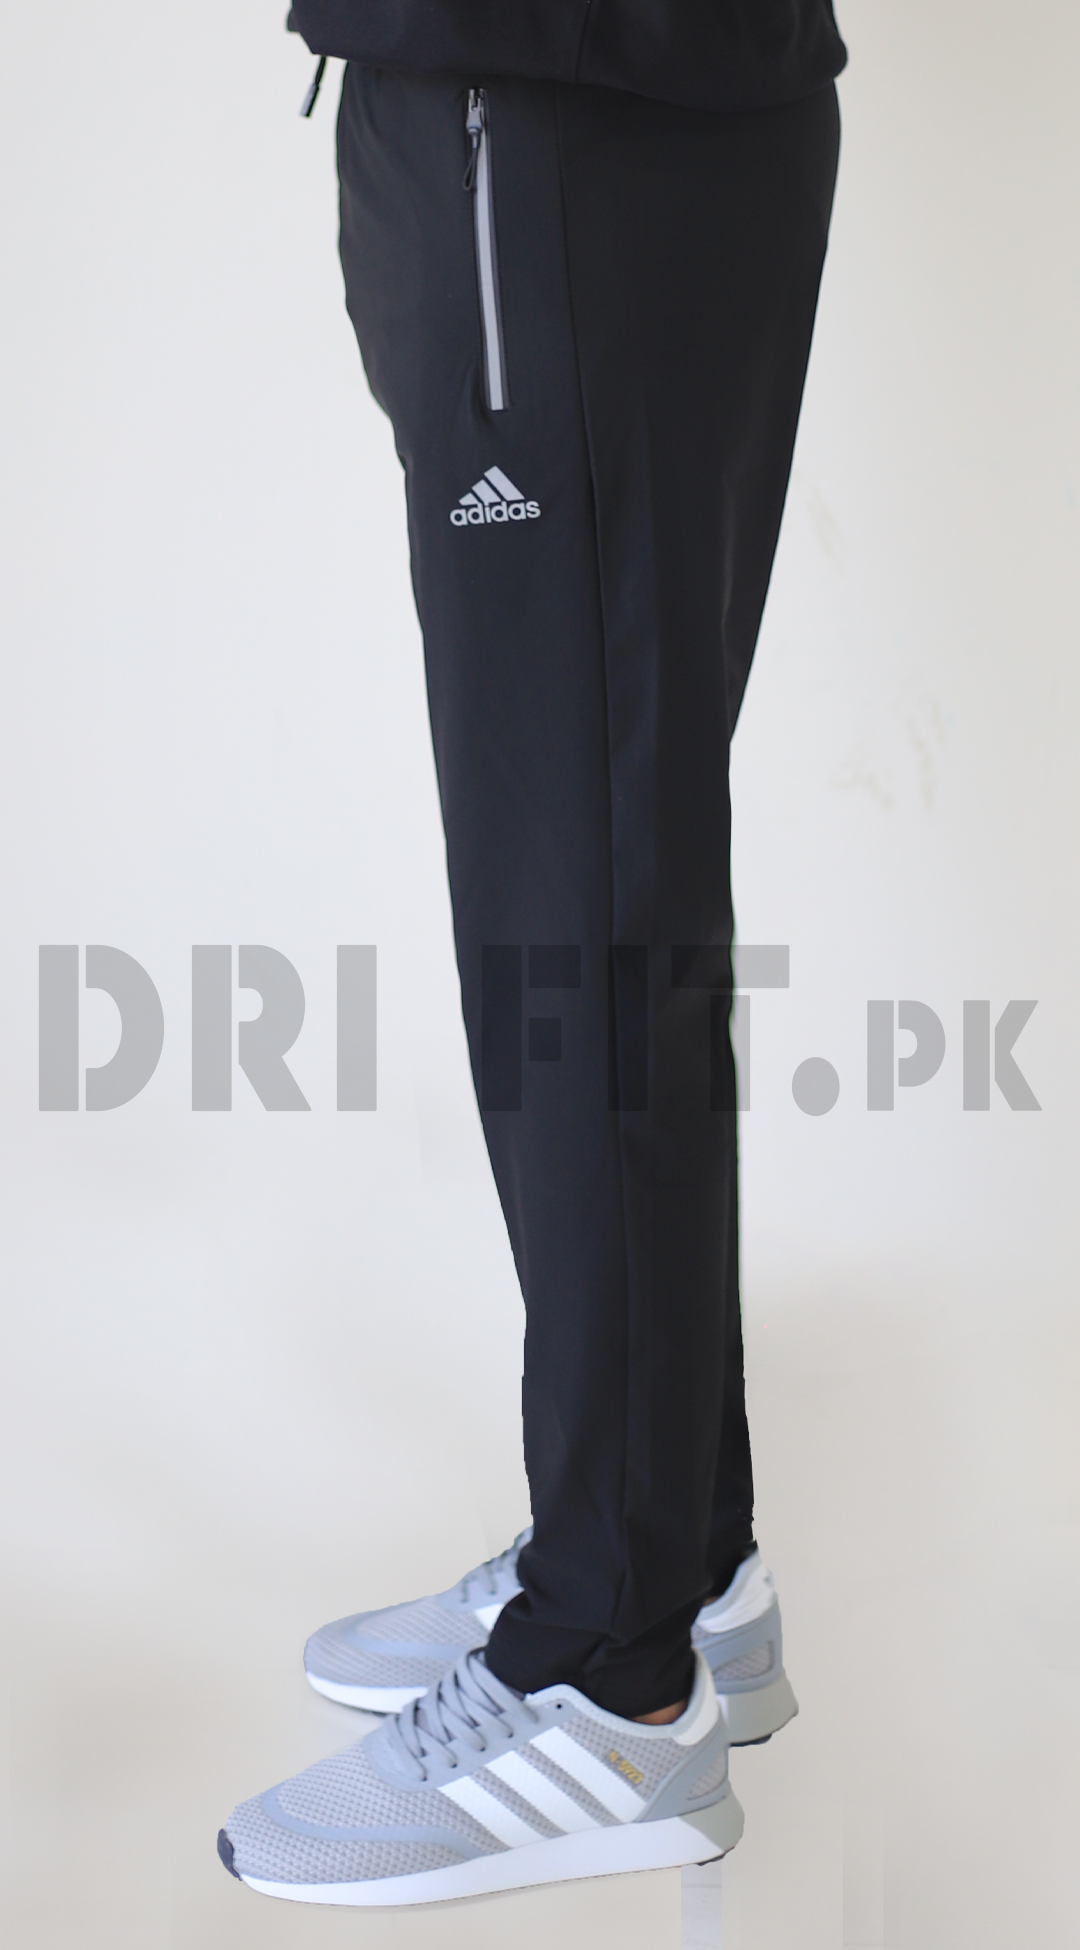 Adidas Black Branded Original Sports Trouser